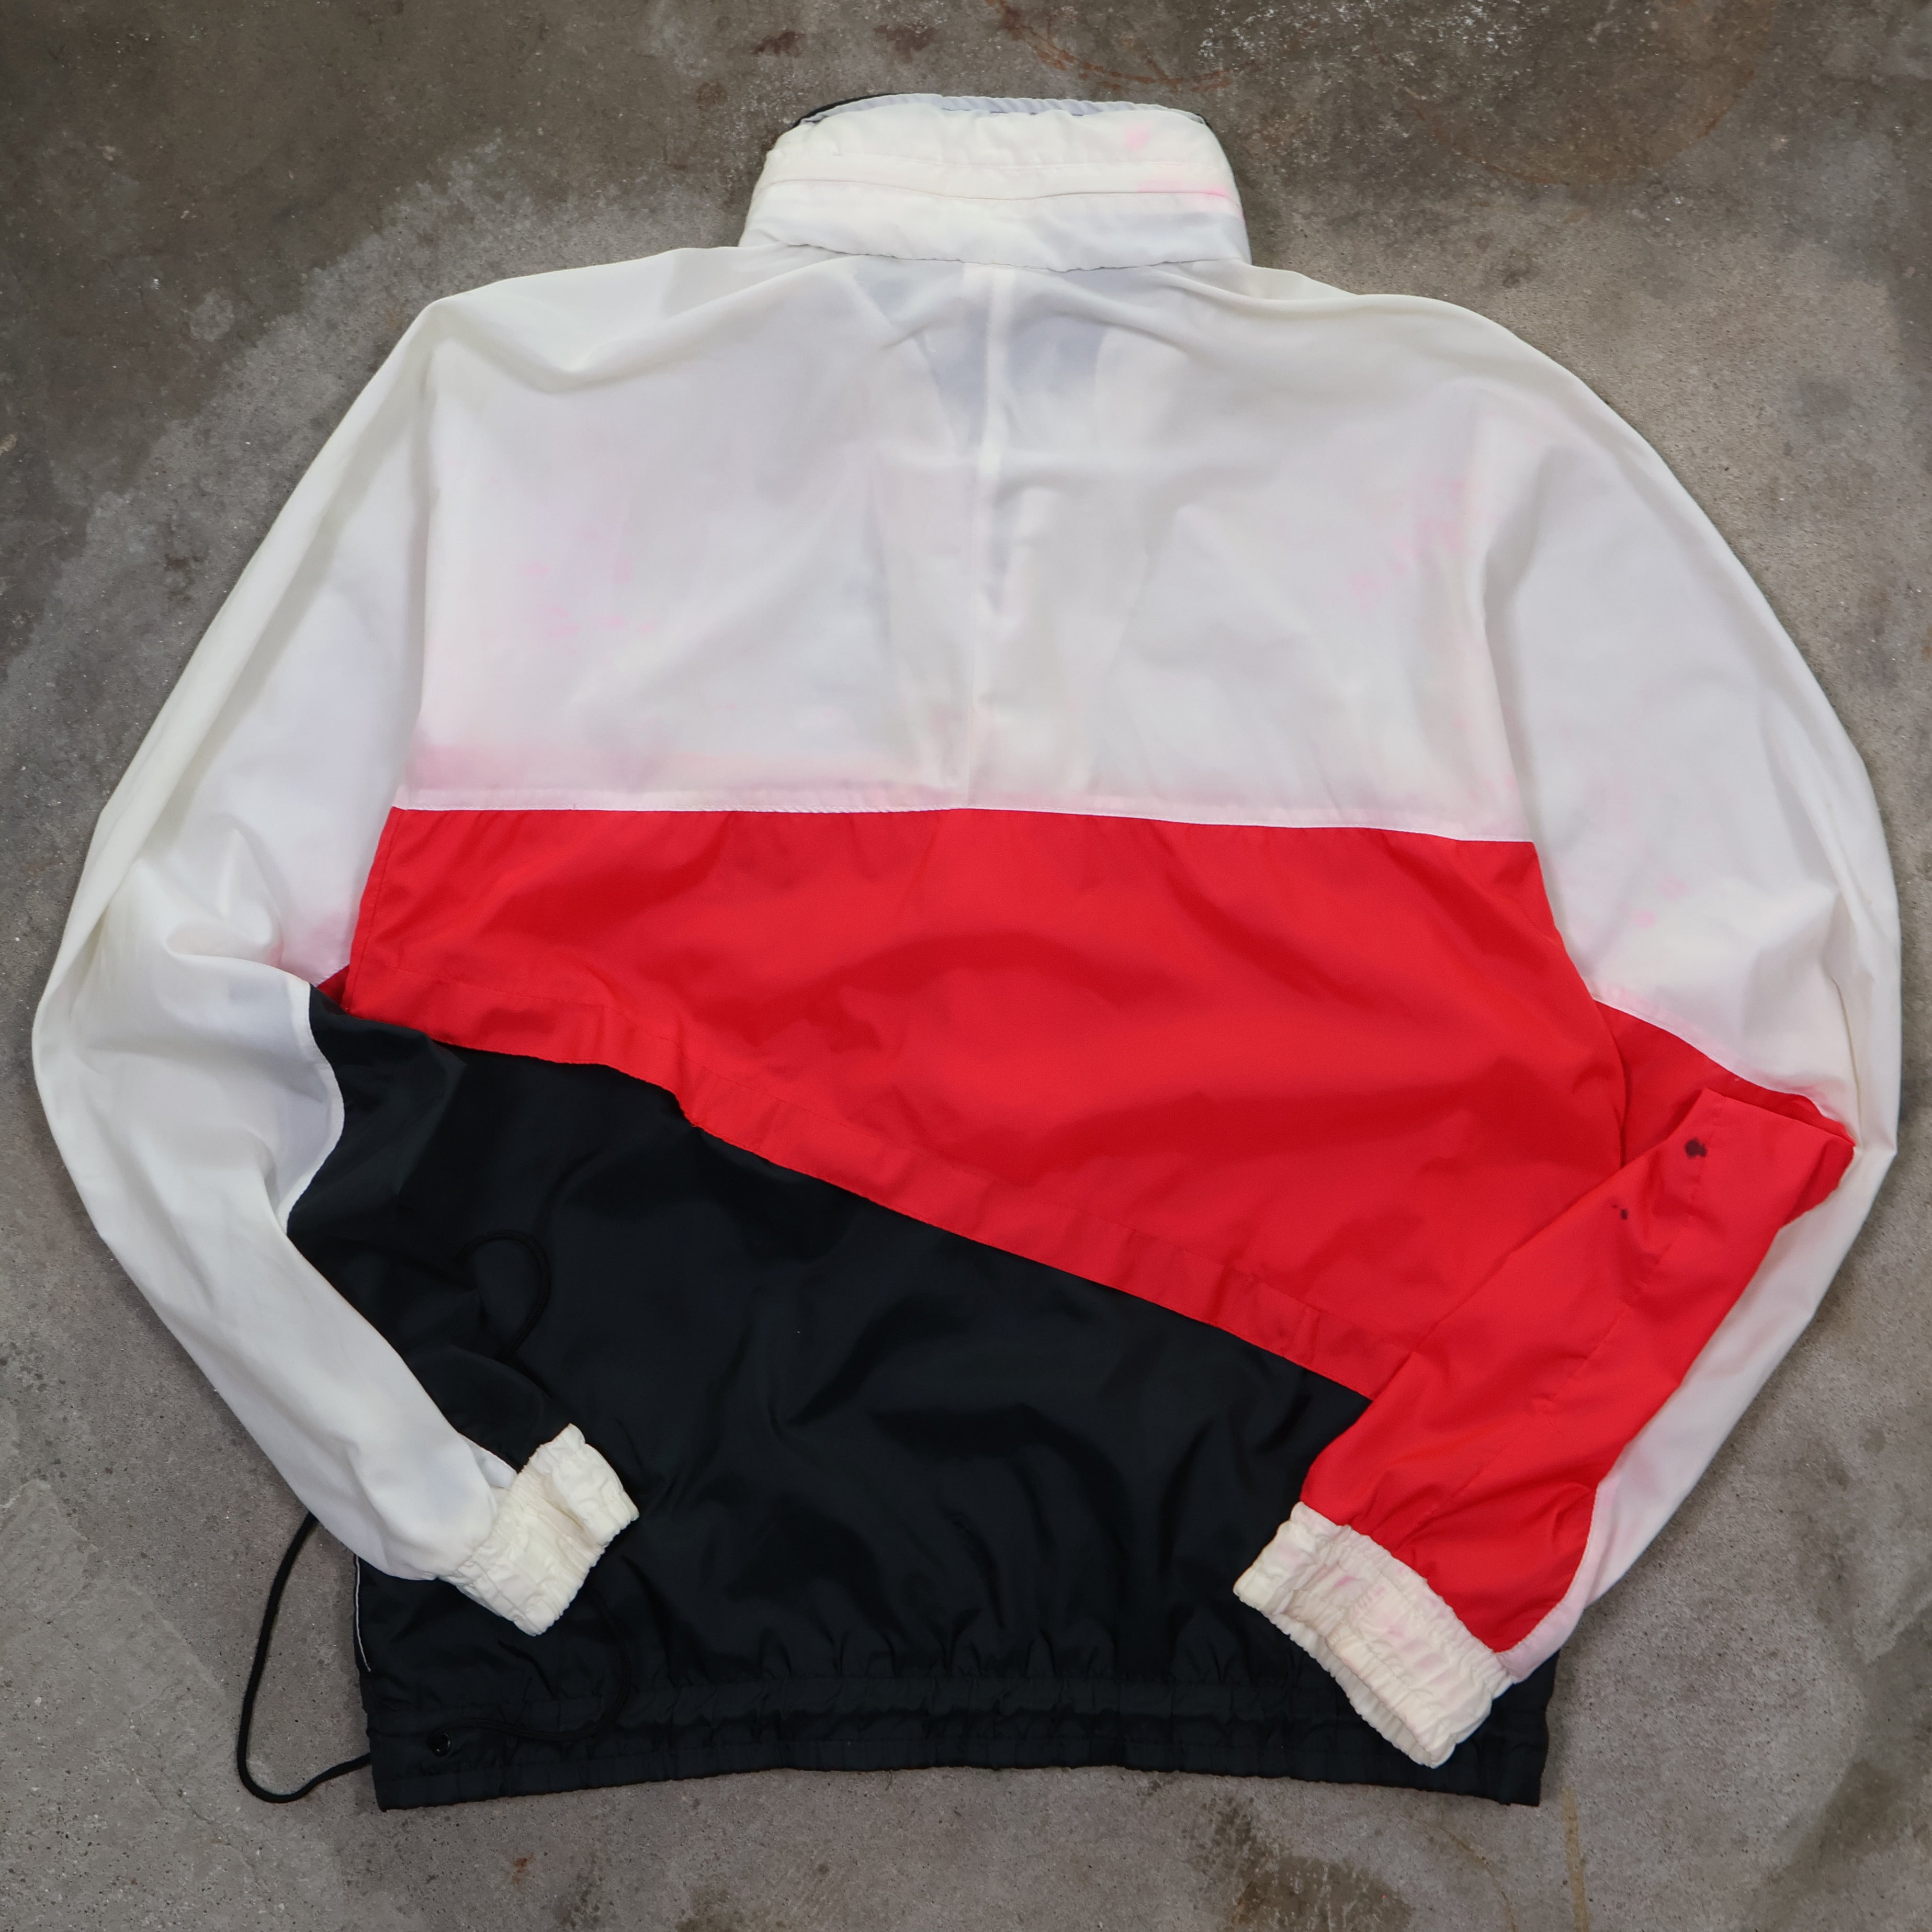 Nike Windbreaker Jacket Red/White/Black 80/90s (Medium)